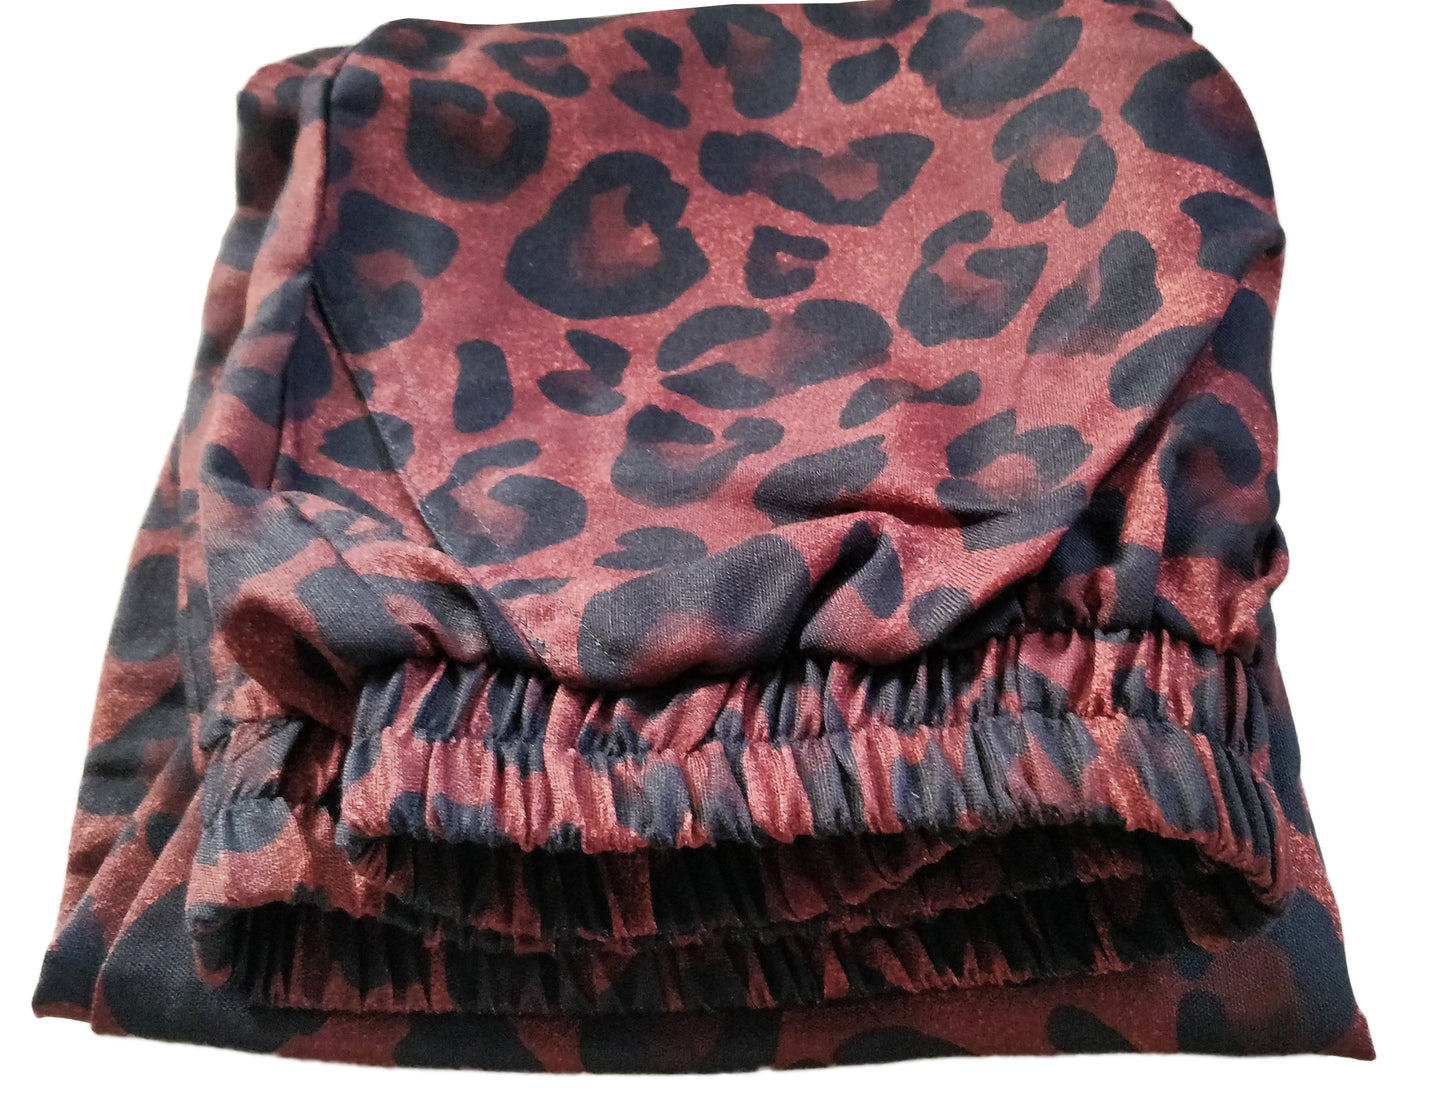 Vintage Leopard Prints Baloon Pajama Capri Style Pant For Womens & Girls